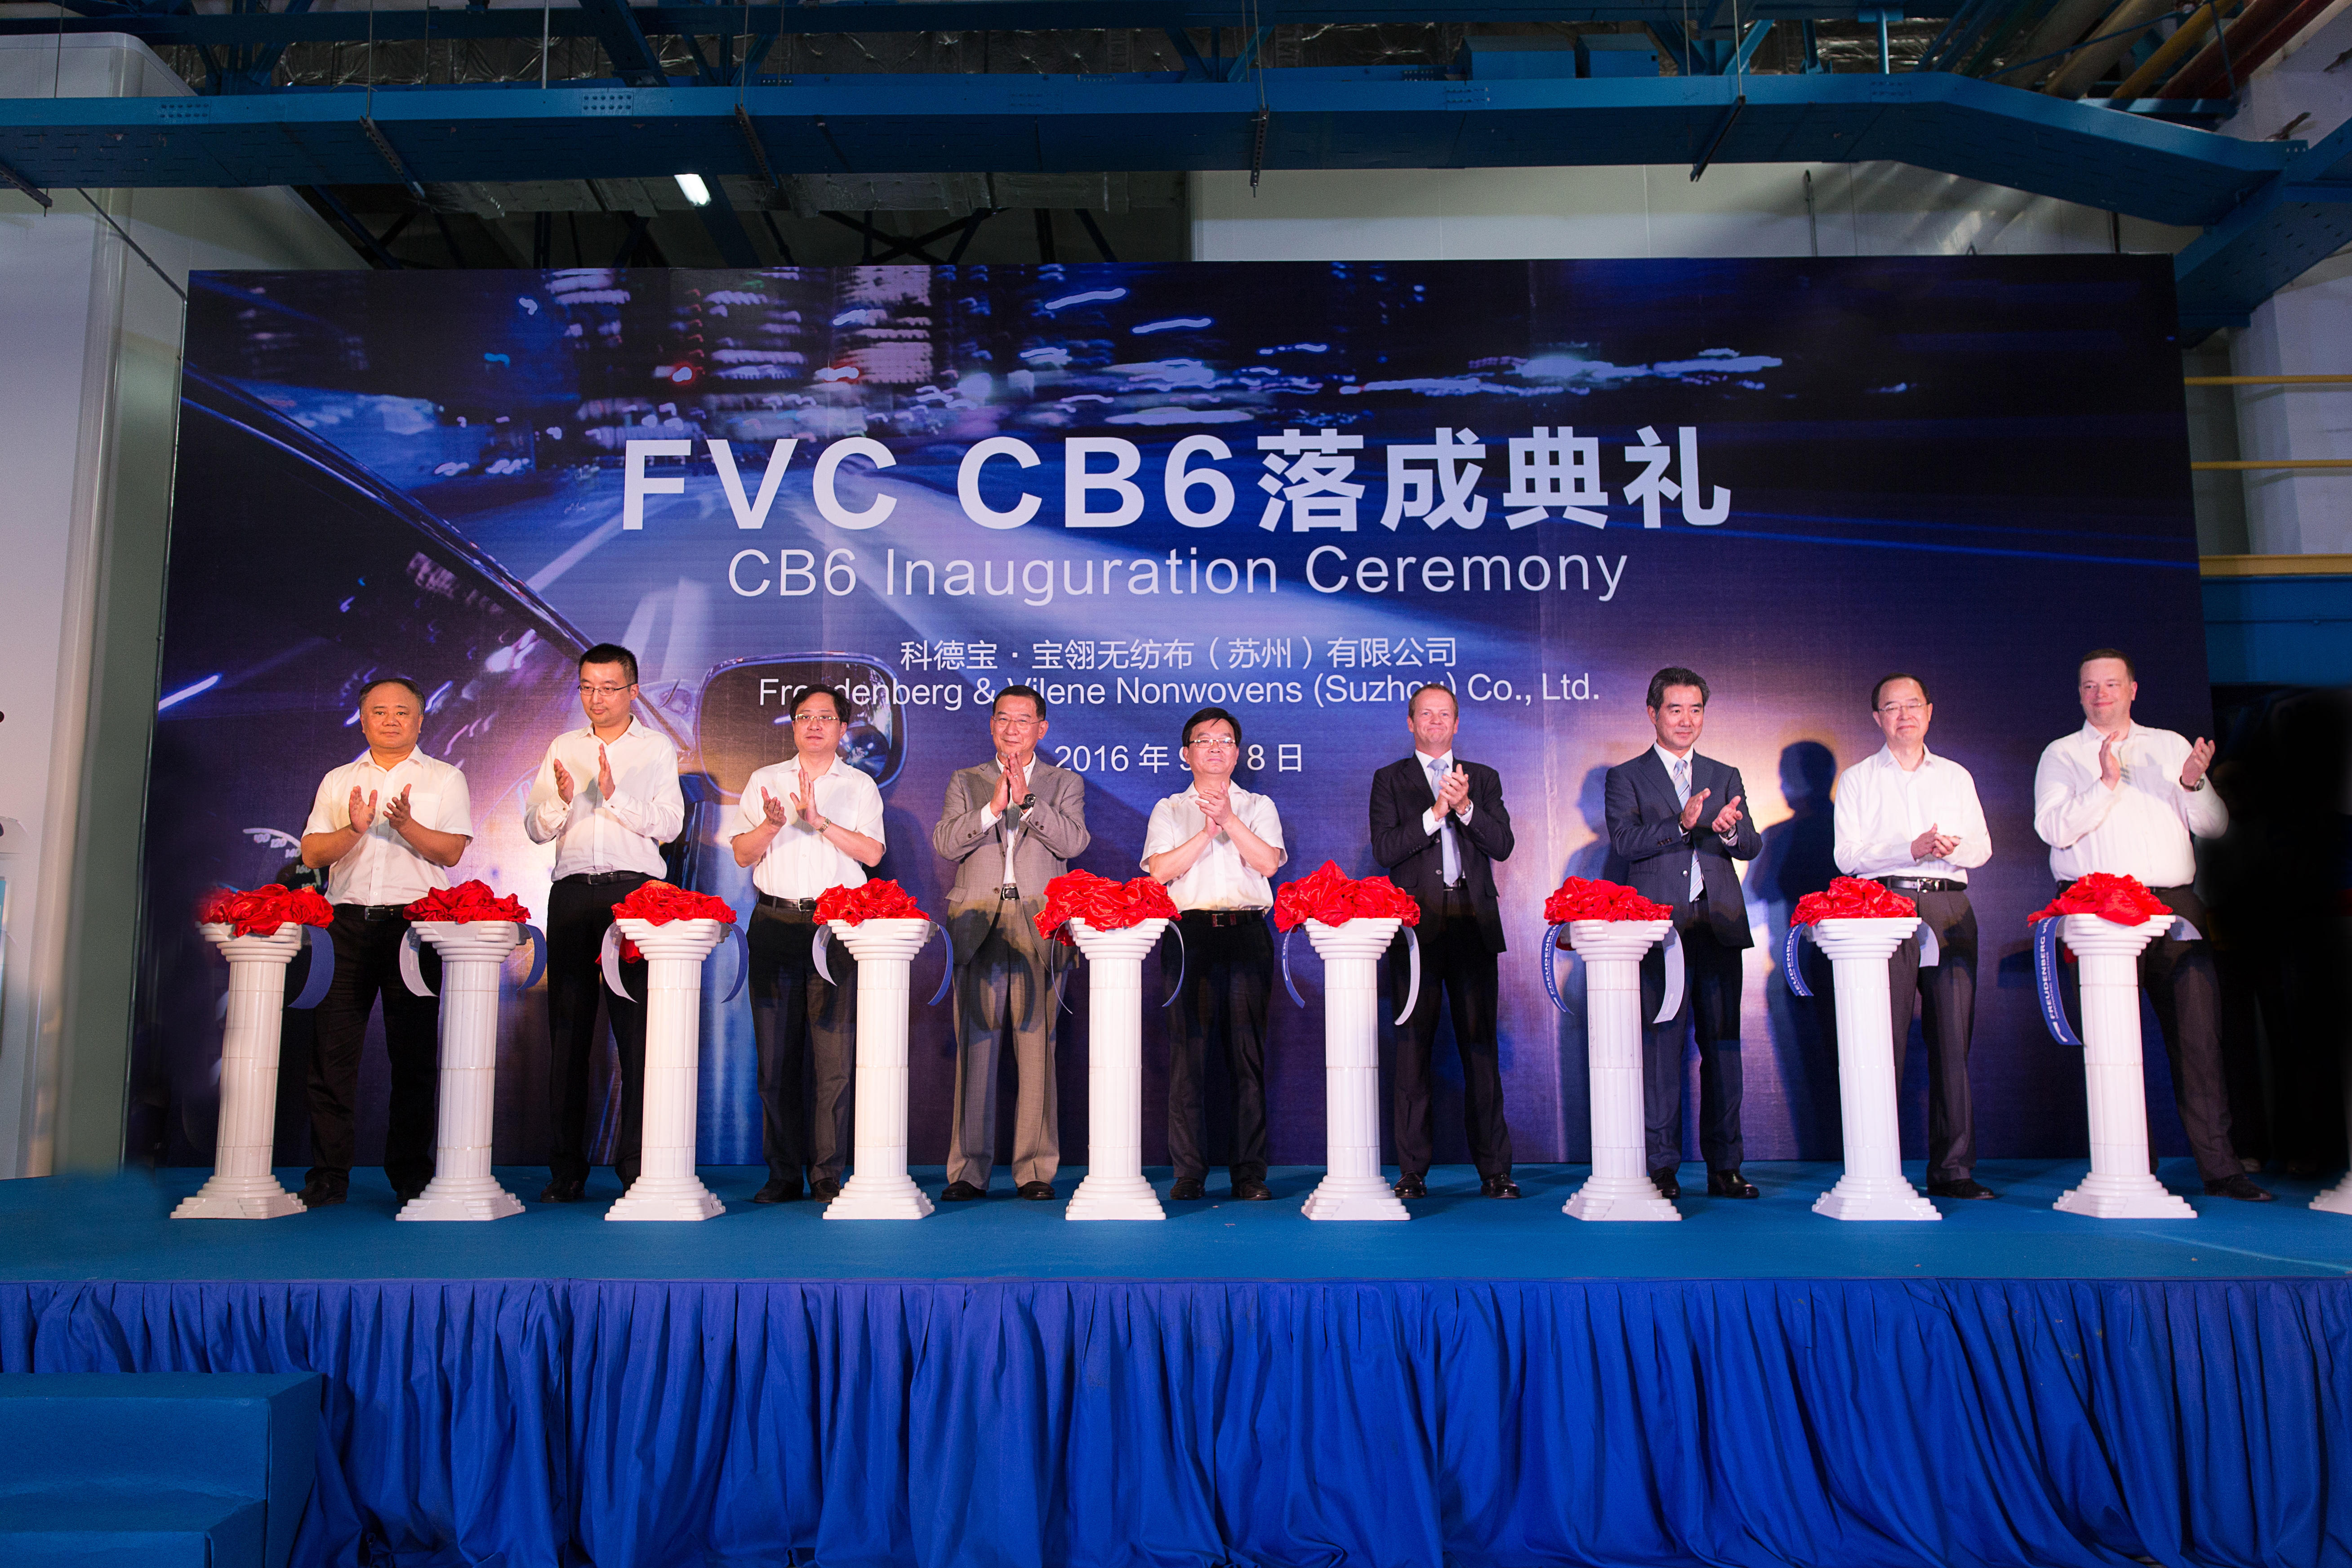  Freudenberg opens new China facility